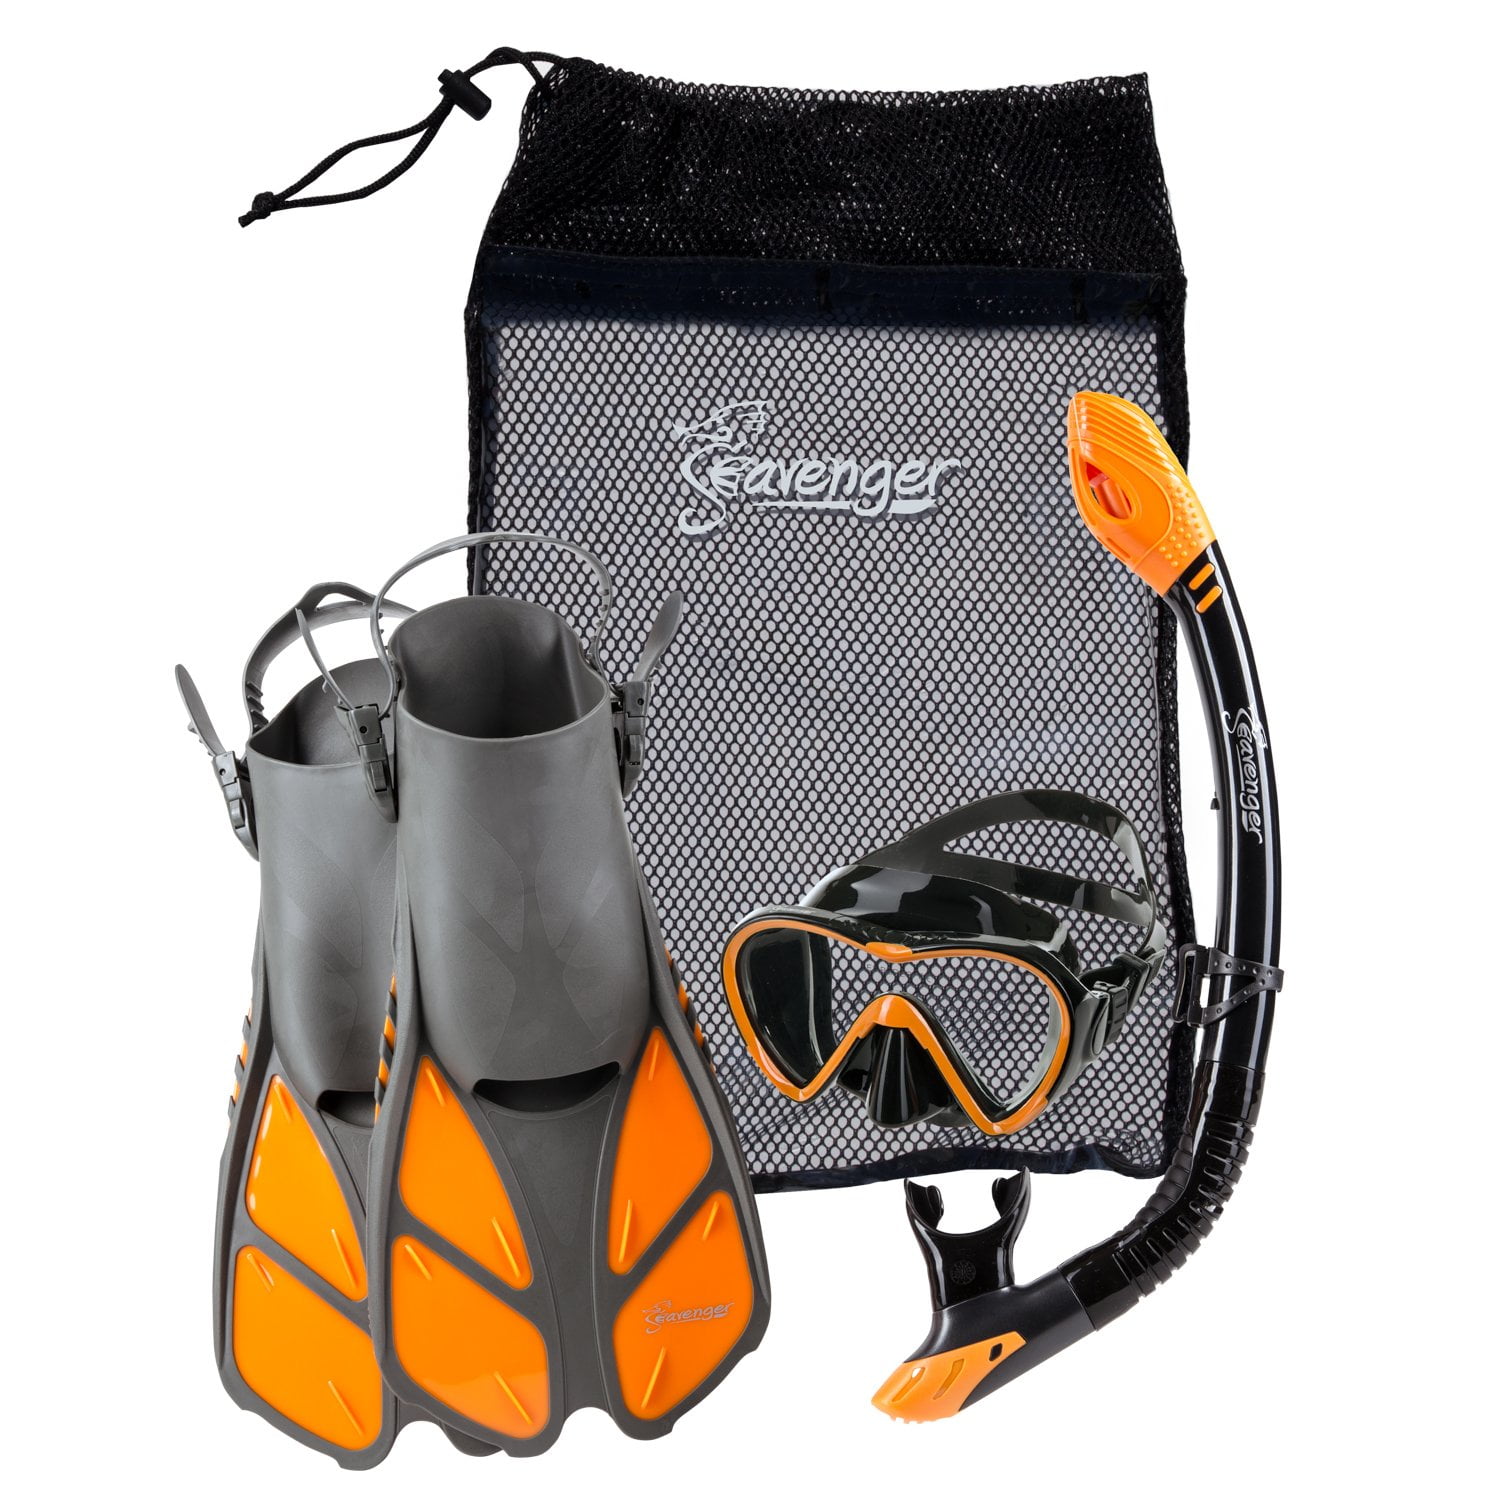 Seavenger Aviator Diving Kit/Snorkeling Set | Kids and Adults (Black Silicone/Orange, L/XL)